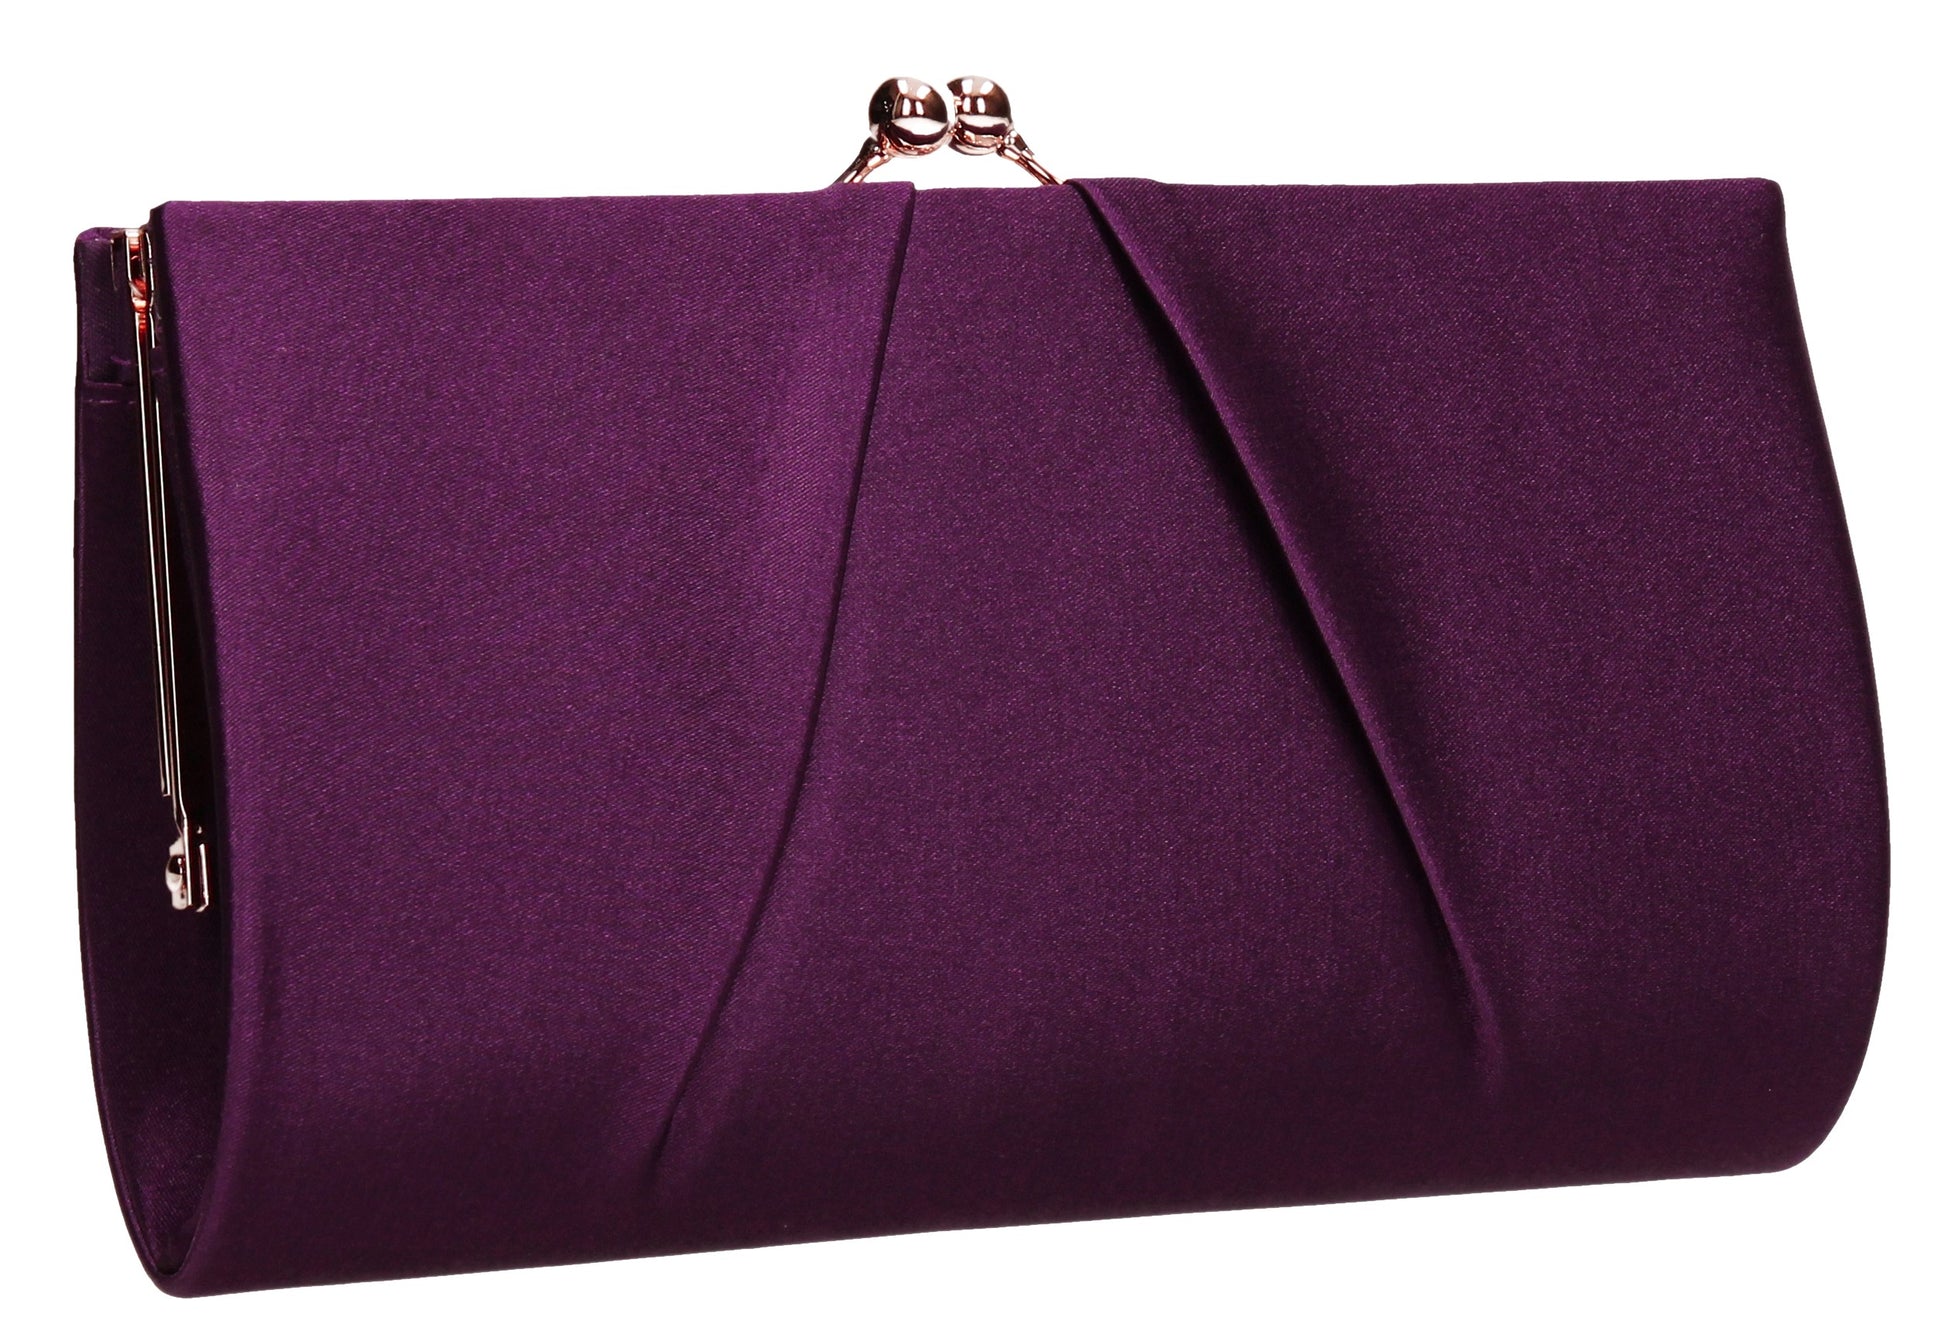 SWANKYSWANS Katy Satin Clutch Bag Purple Cute Cheap Clutch Bag For Weddings School and Work